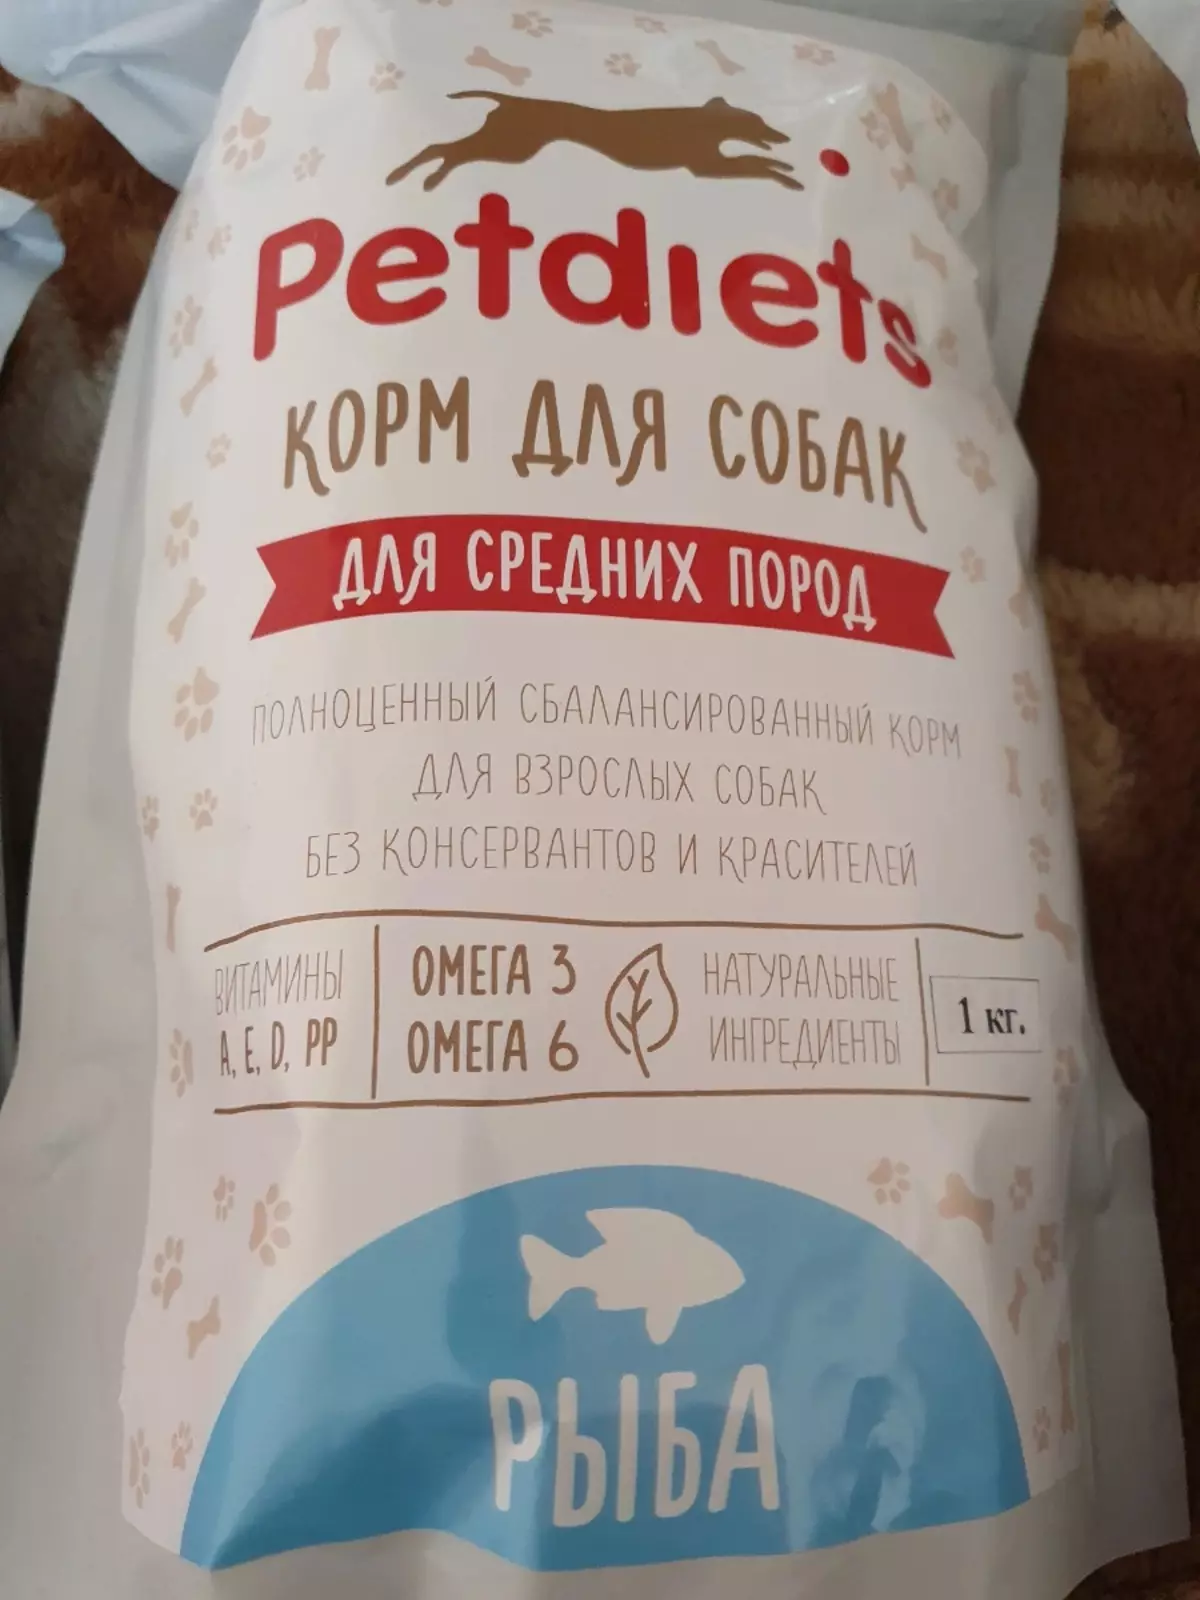 Petdiets فیڈ: کتے اور بڑے نسلوں کے کتے اور puppies کے لئے خشک خوراک، دیگر مصنوعات، جائزہ جائزے 25087_10